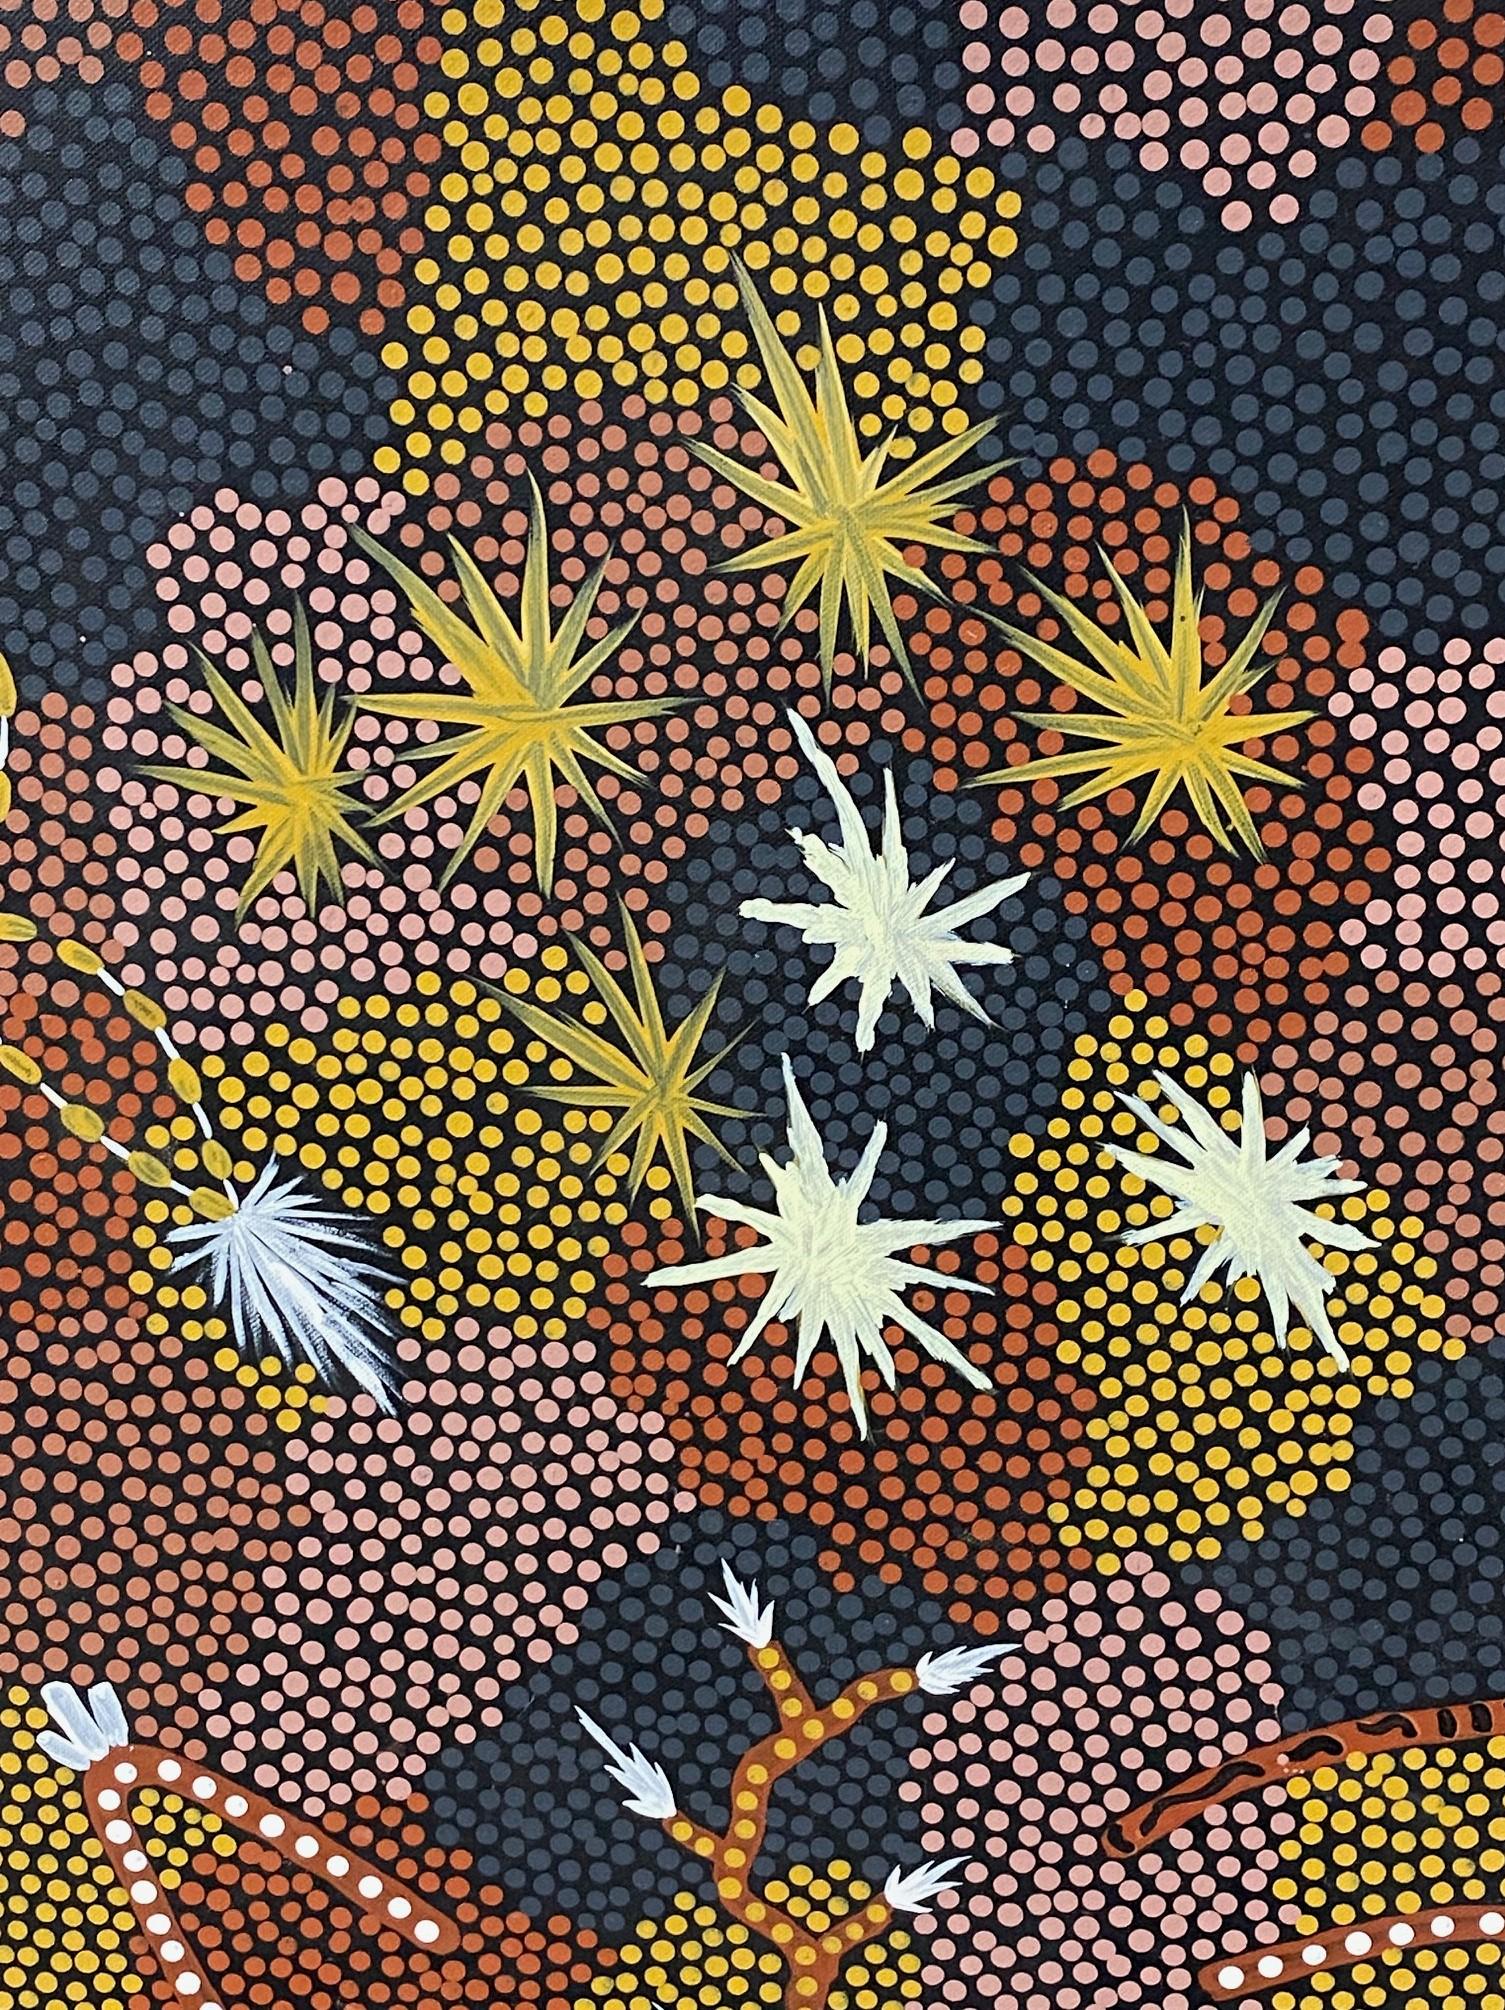 Folk Art Clifford Possum Tjapaltjarri Indigenous Aboriginal Art Large Original Painting For Sale